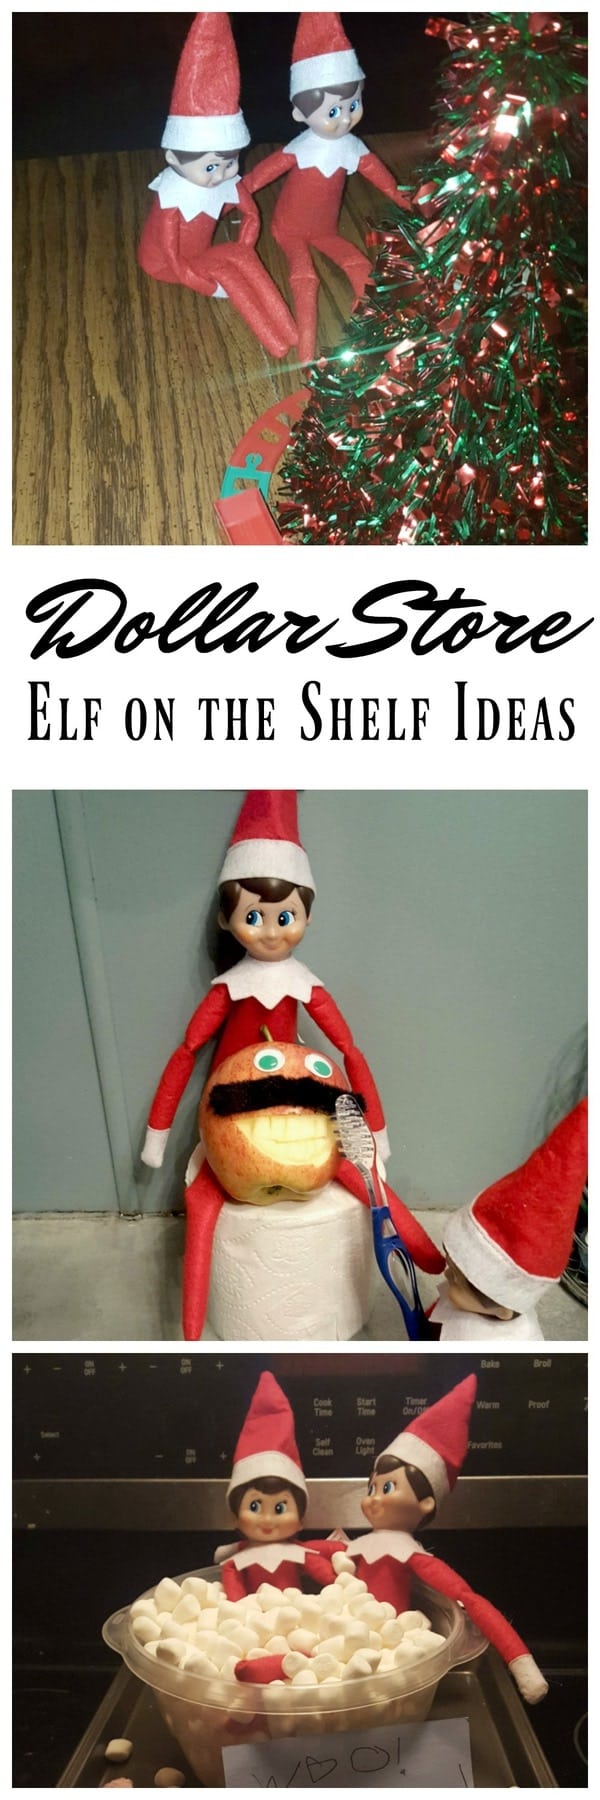 Dollar Store Elf on the Shelf Toys Ideas • MidgetMomma